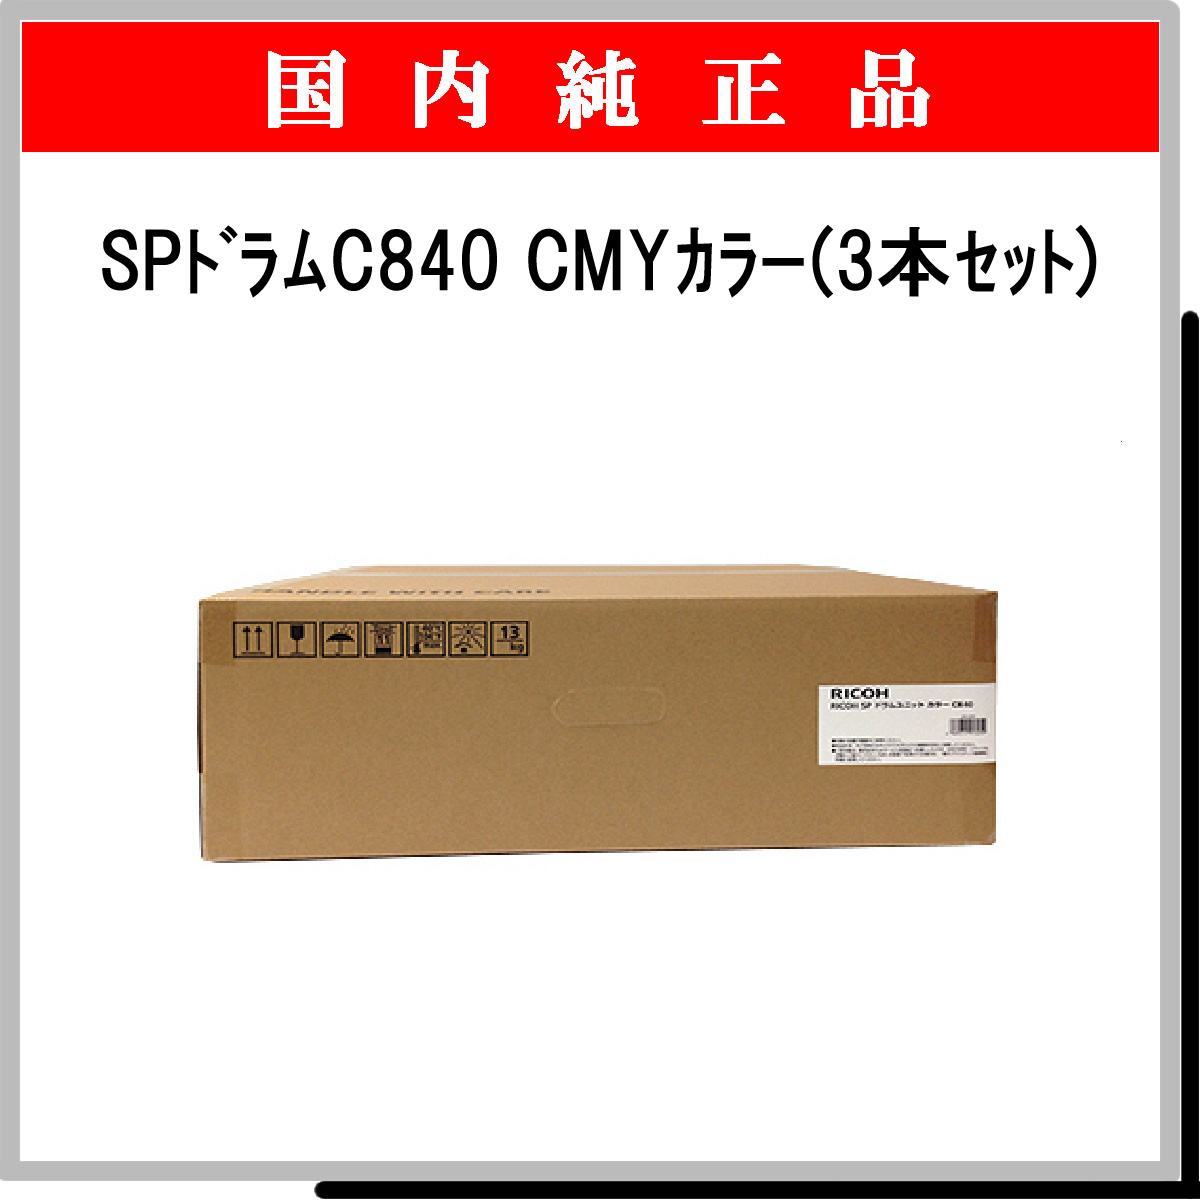 SP ﾄﾞﾗﾑﾕﾆｯﾄ C840 ｶﾗ-3色ﾊﾟｯｸ 純正 - ウインドウを閉じる